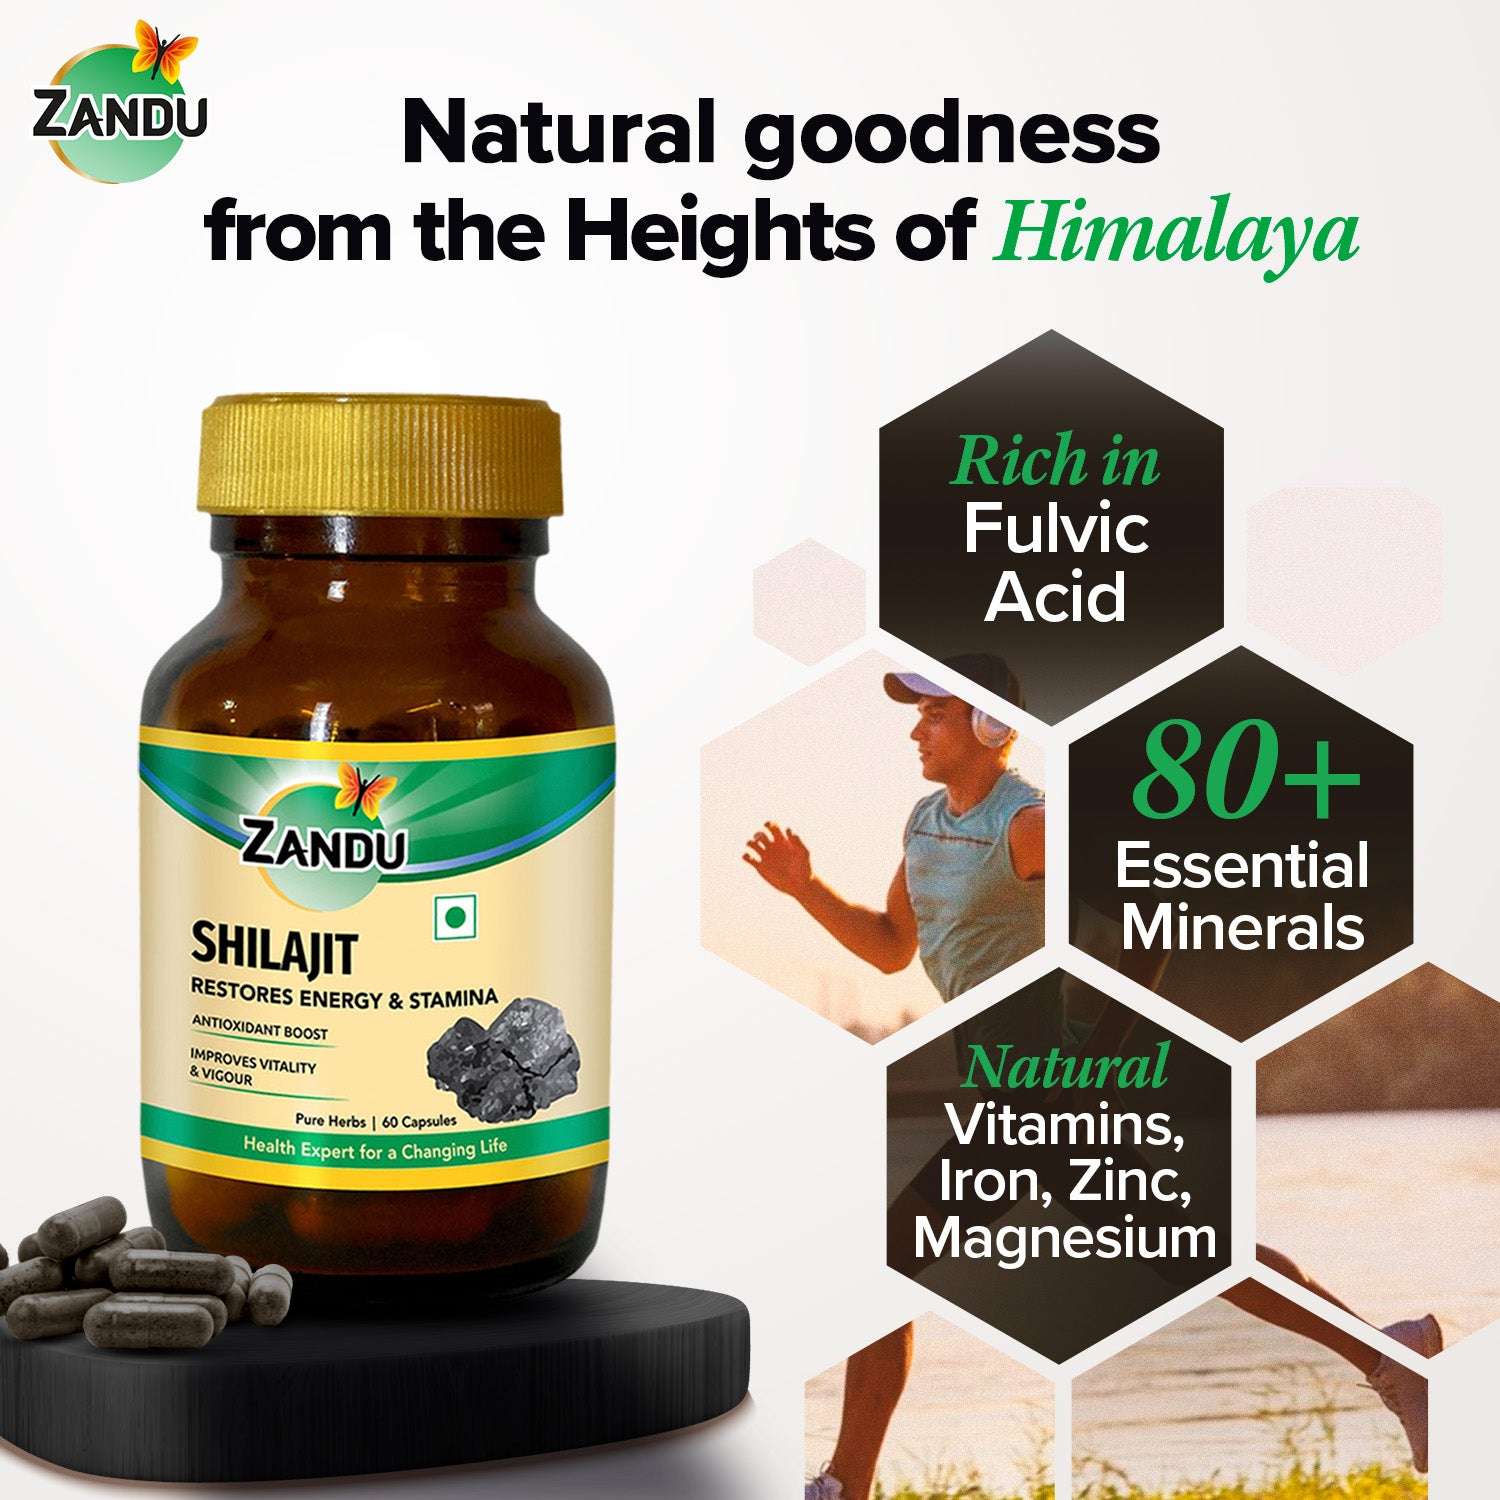 Zandu Shilajit Capsules with 100% Pure Himalayan Shilajit for Strength, Vigor & Vitality (60 Caps)